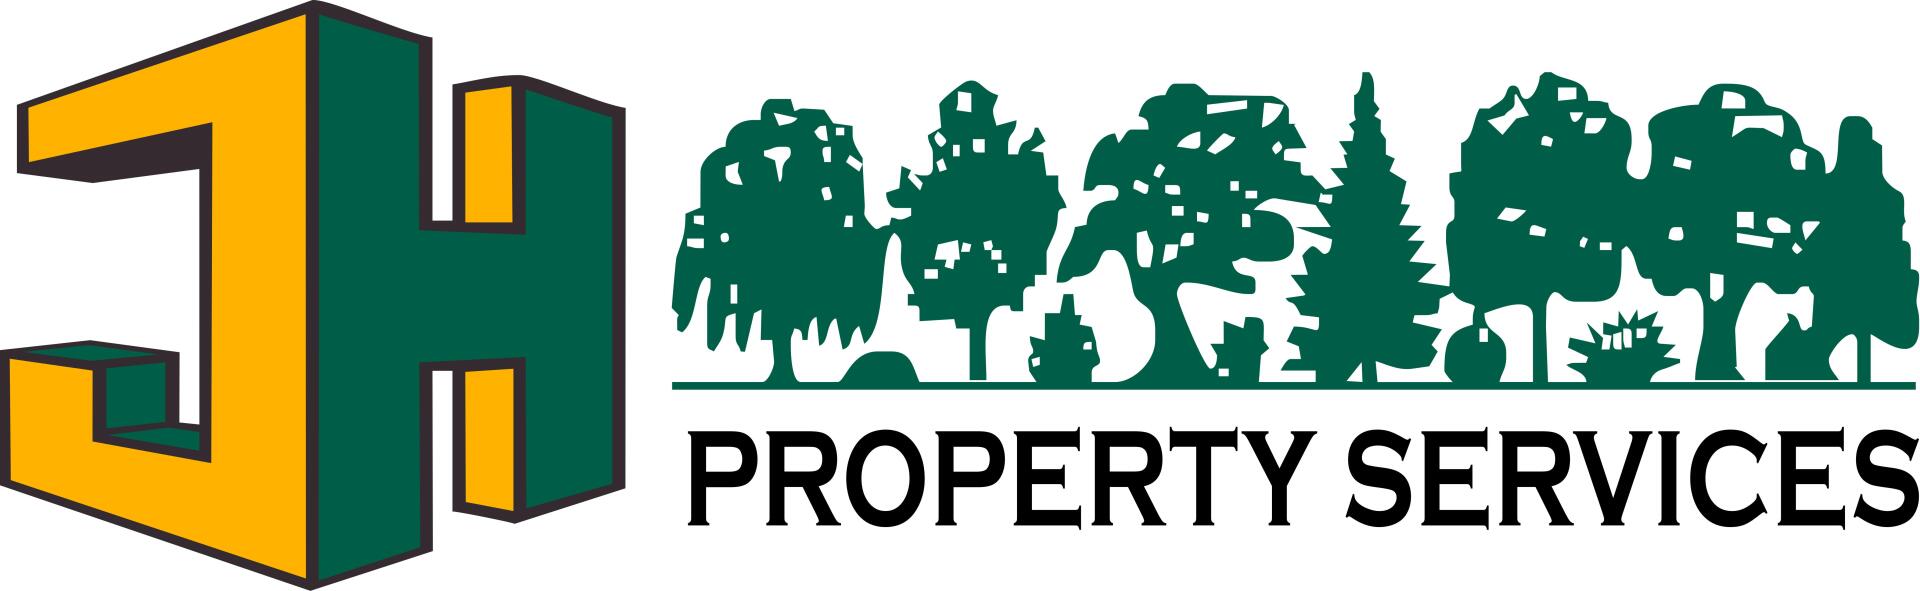 JH Property Services - logo